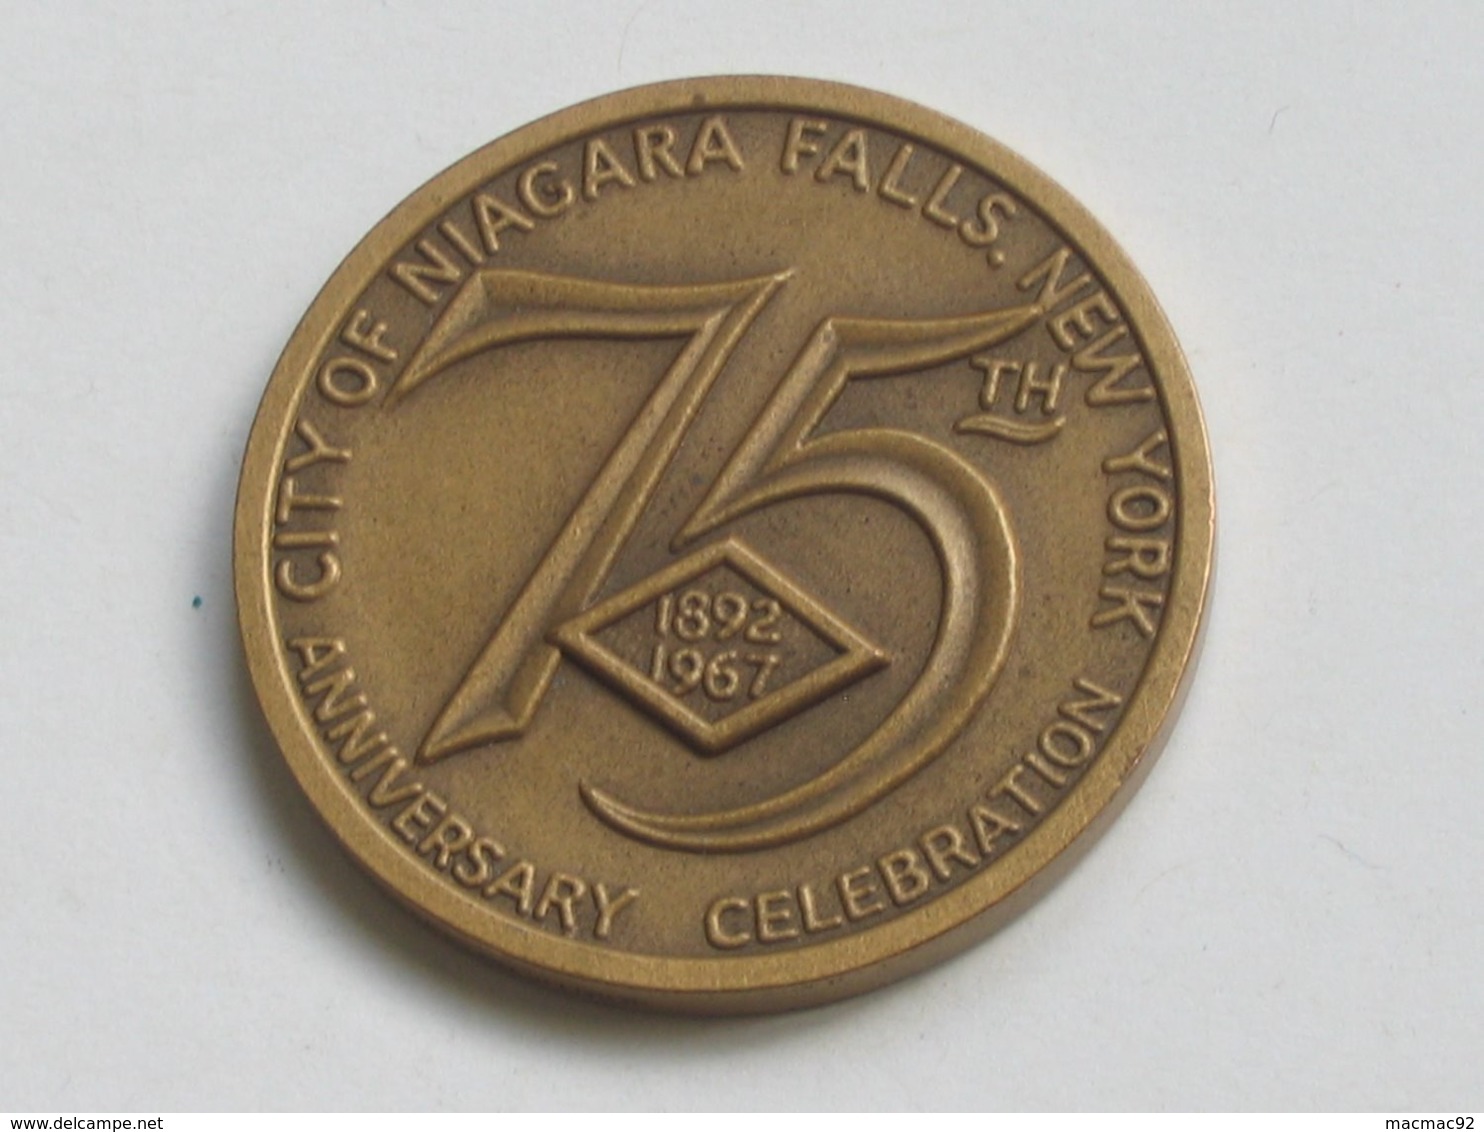 Médaille 75th Anniversary Celebration - City Of Niagara Falls . New York -1892-1967  **** EN ACHAT IMMEDIAT **** - Professionnels/De Société